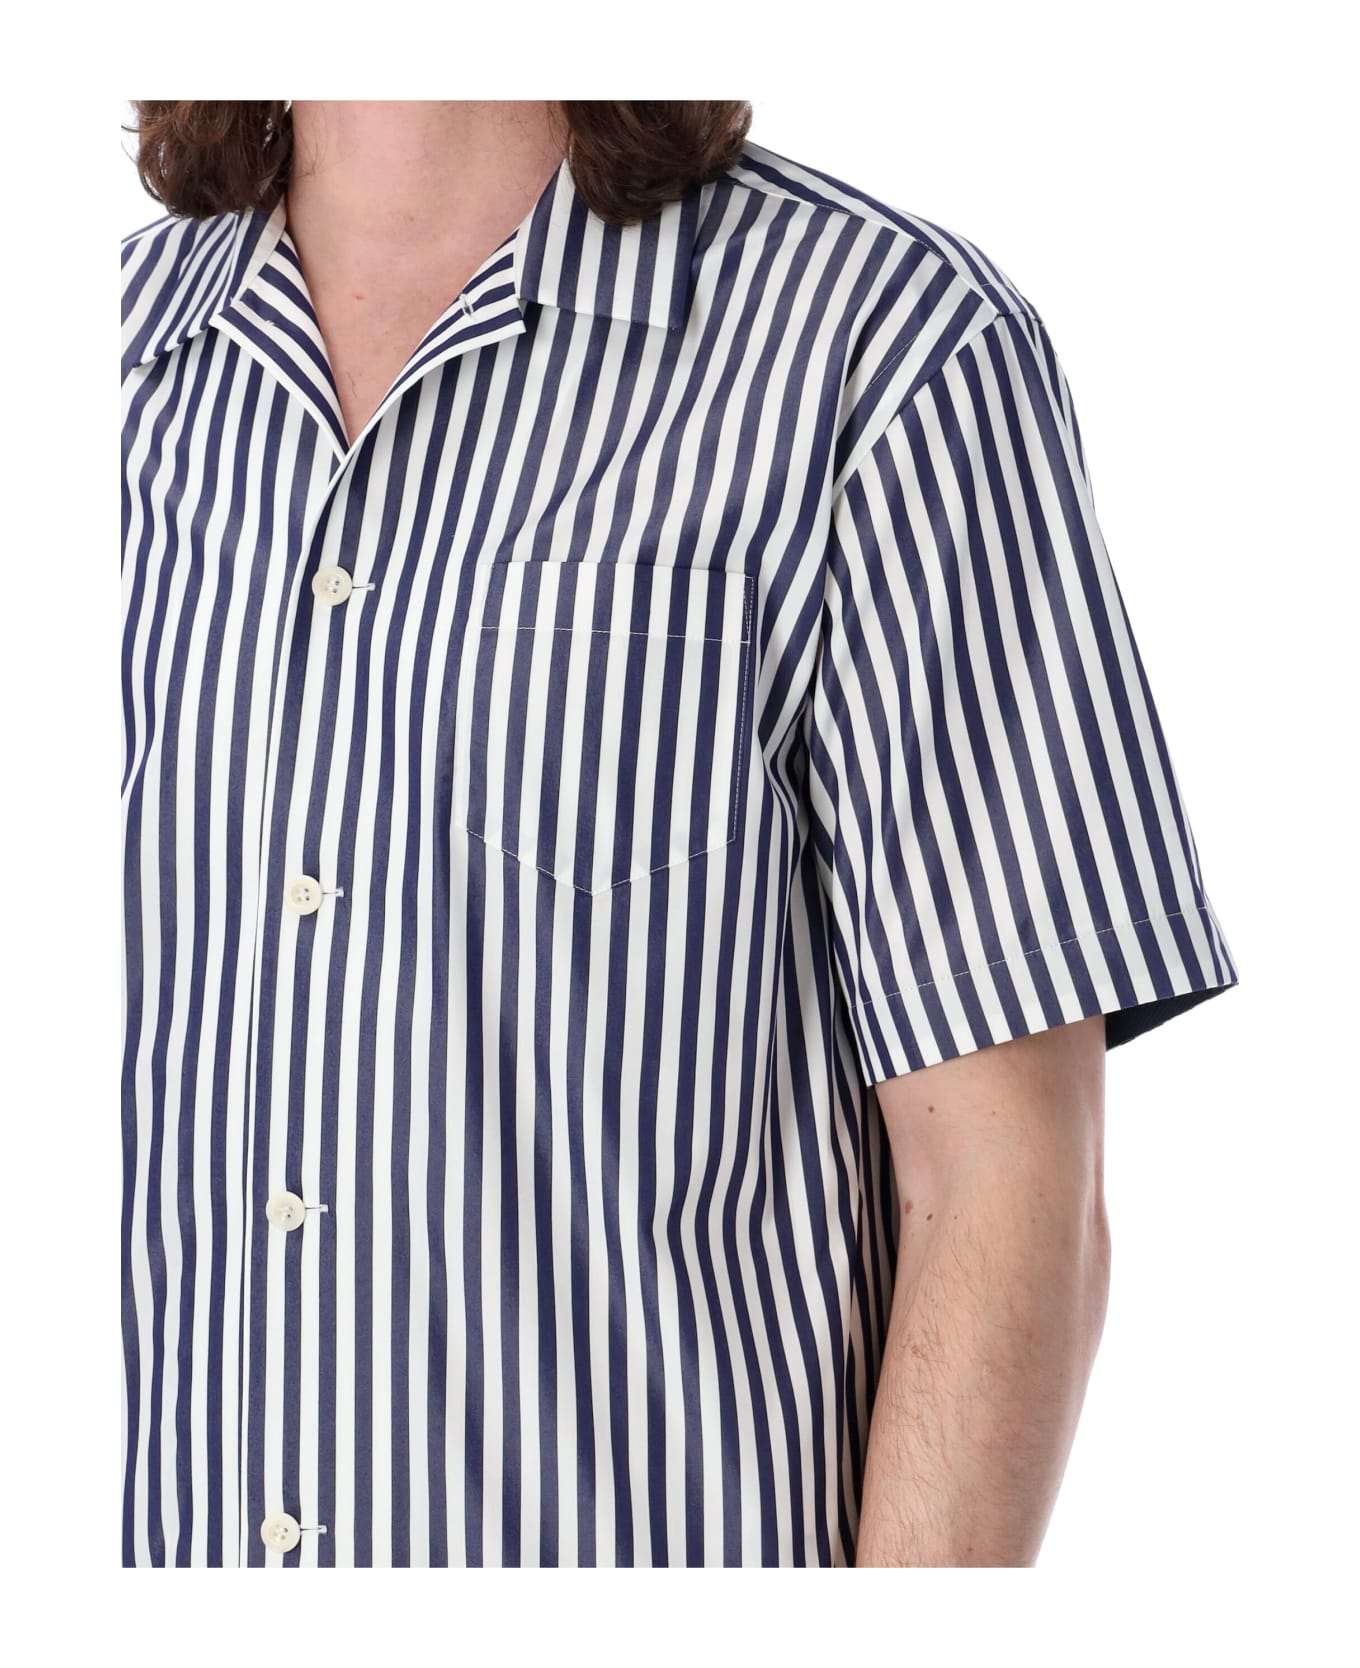 Sacai Striped Shirt - NAVY STRIPE